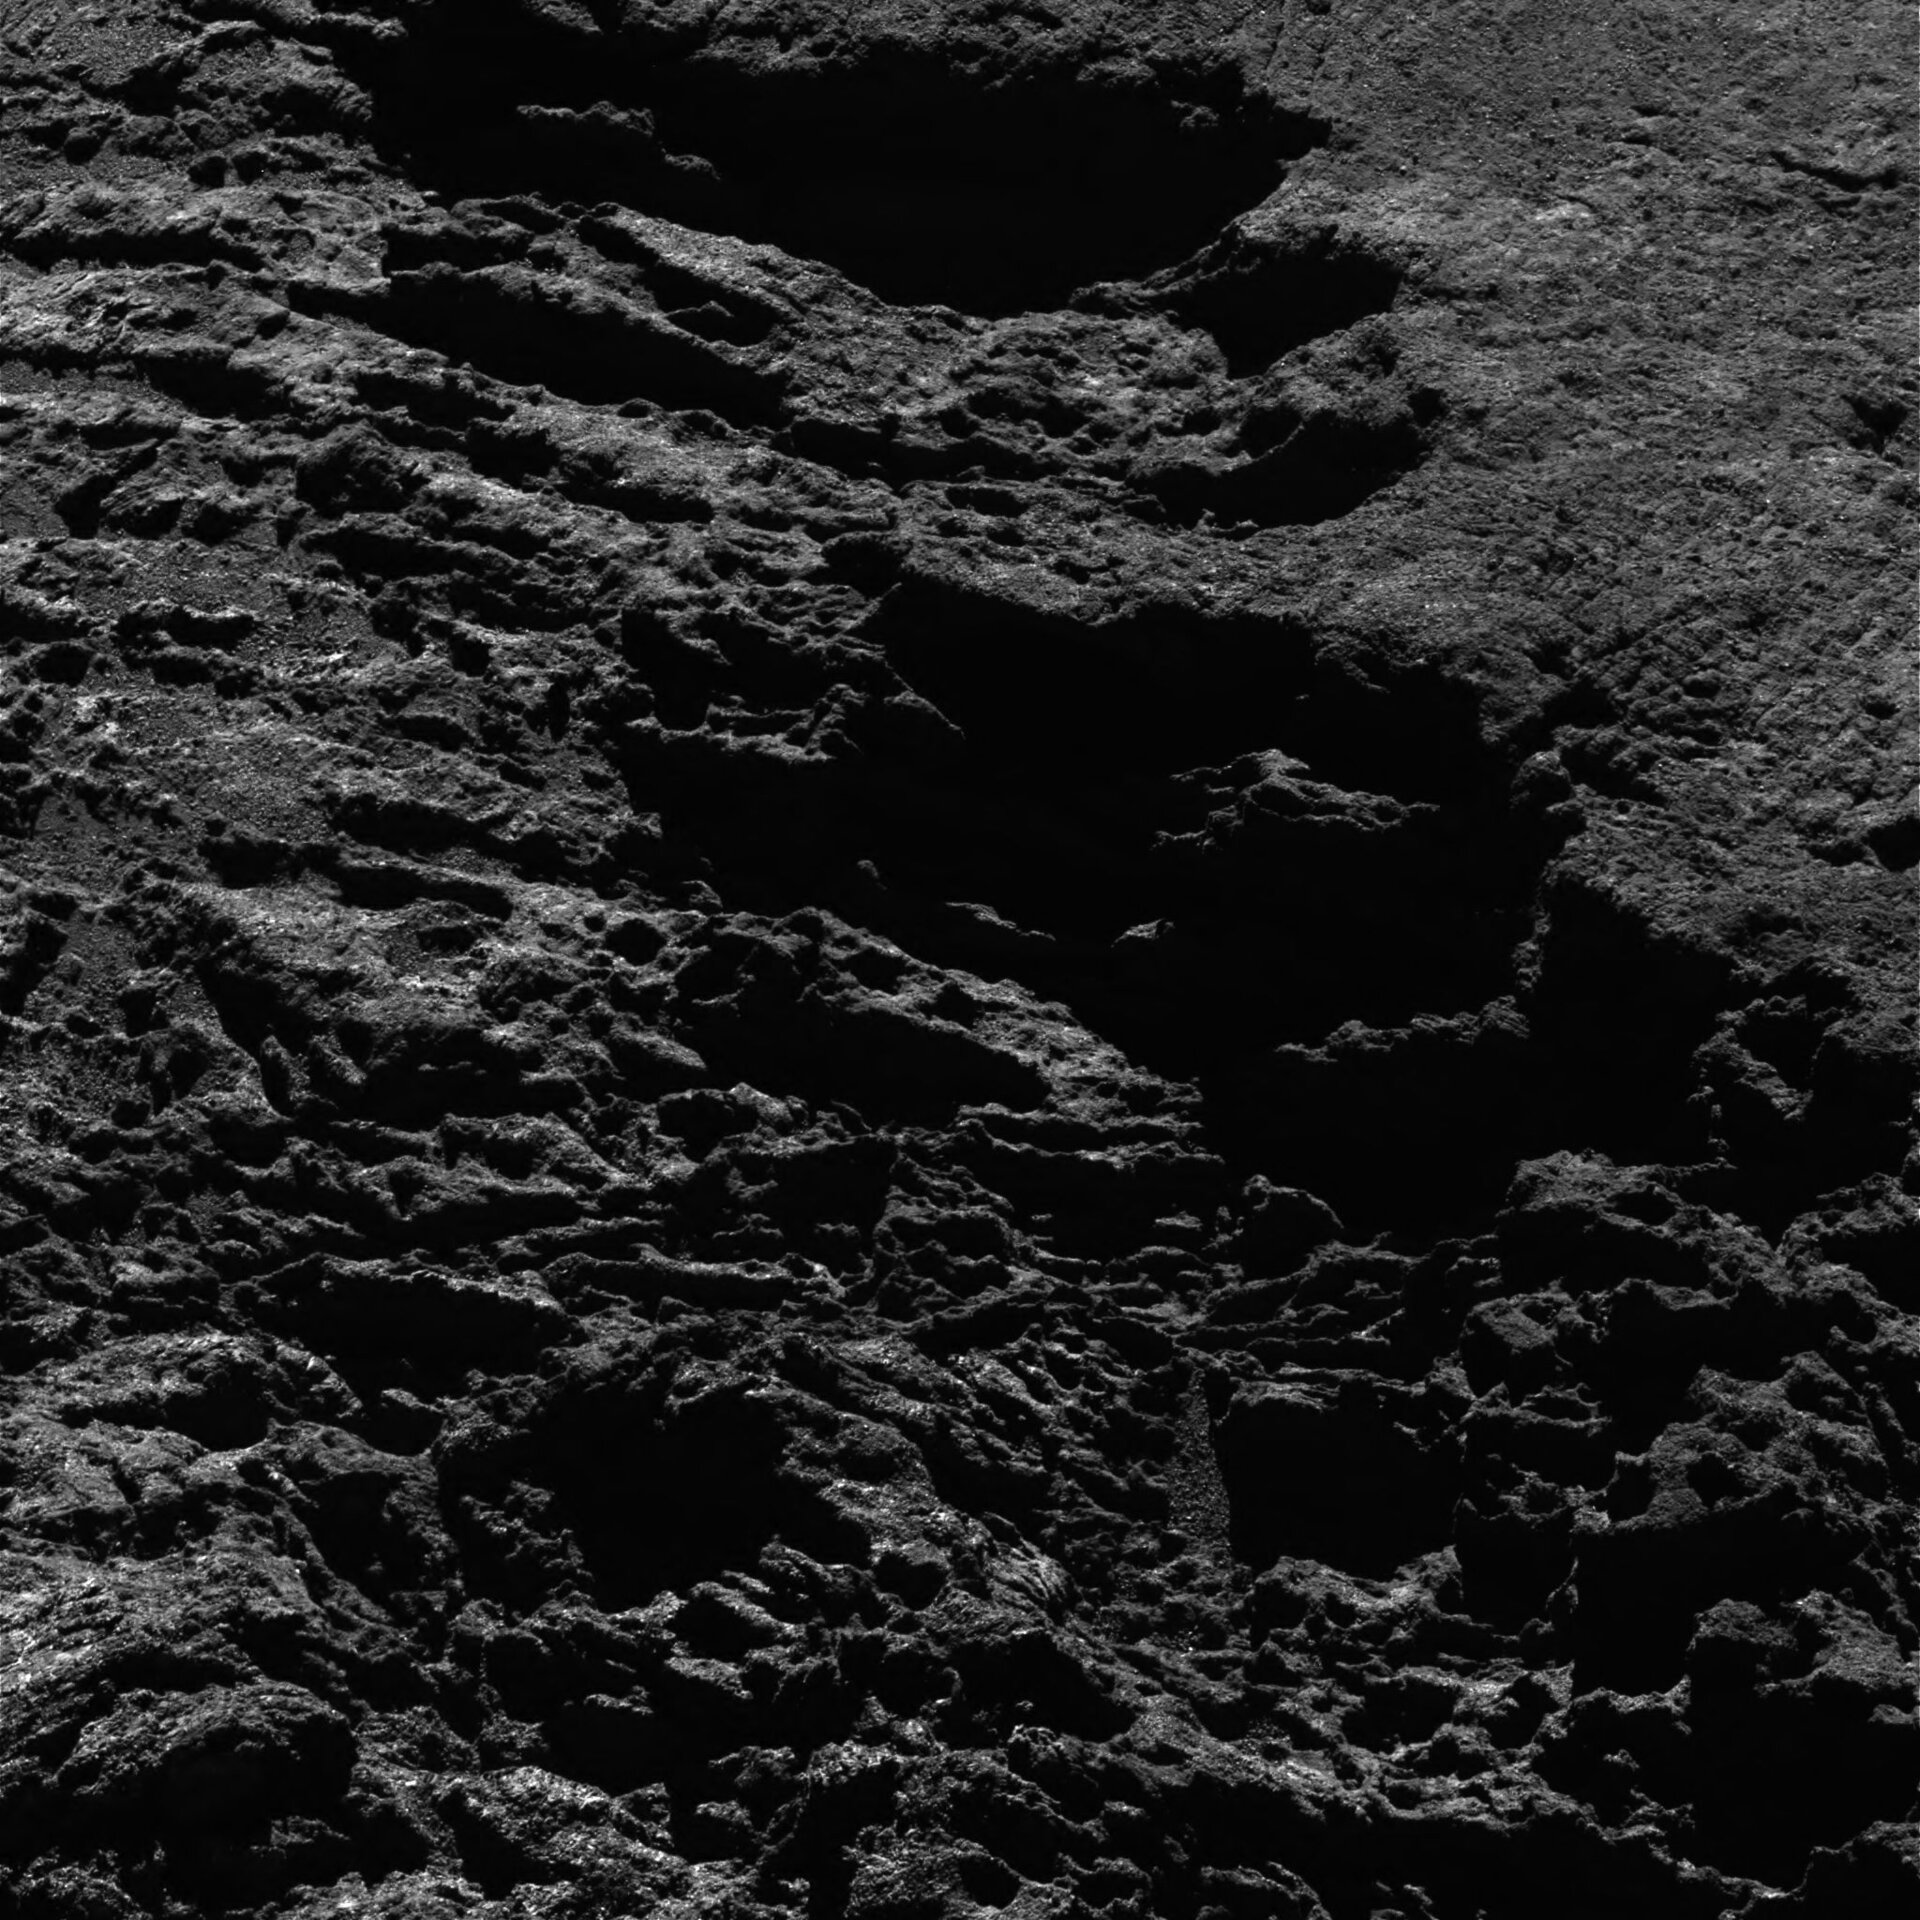 Comet on 24 August 2016 – OSIRIS narrow-angle camera